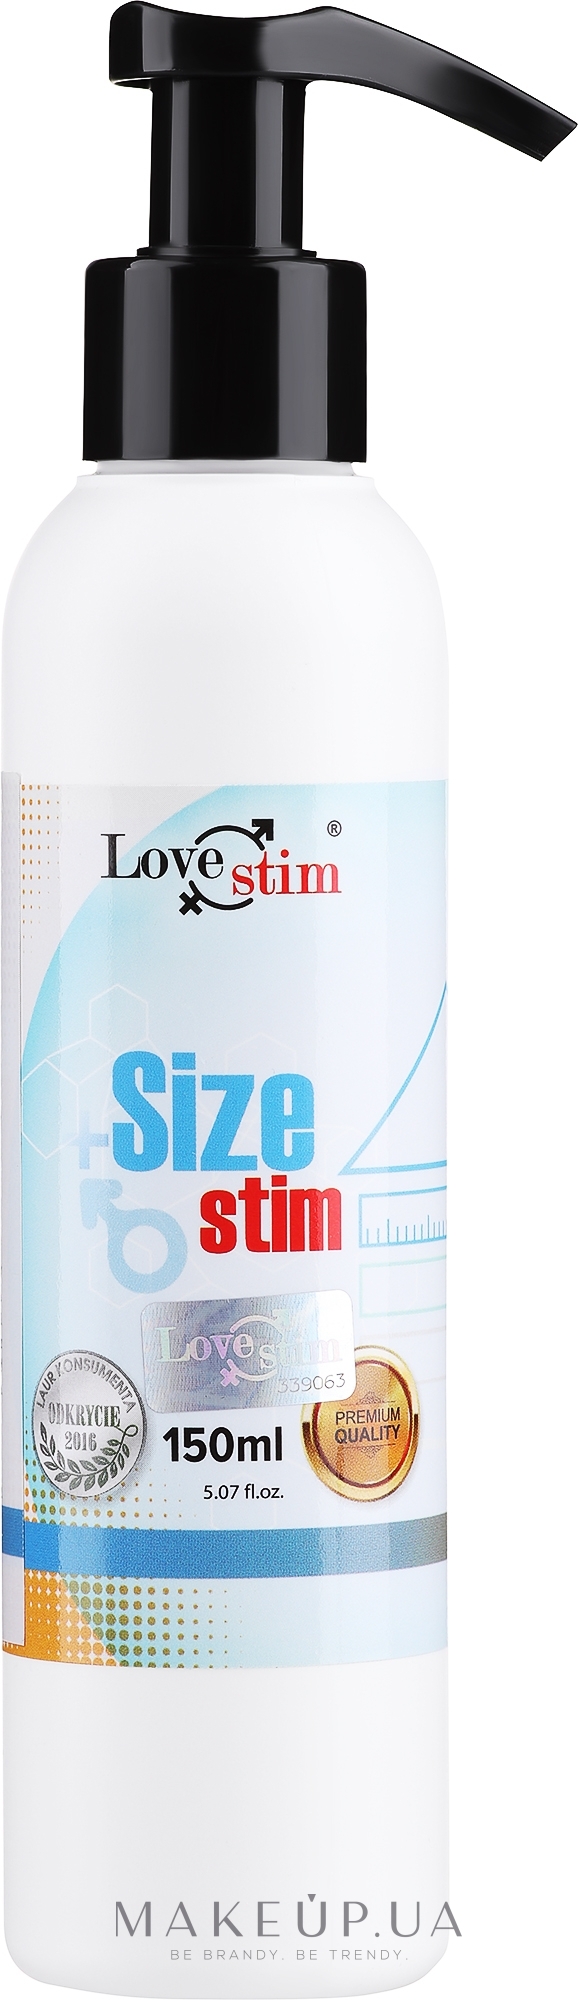 Гель для увеличения полового члена - Love Stim +Size Stim — фото 150ml